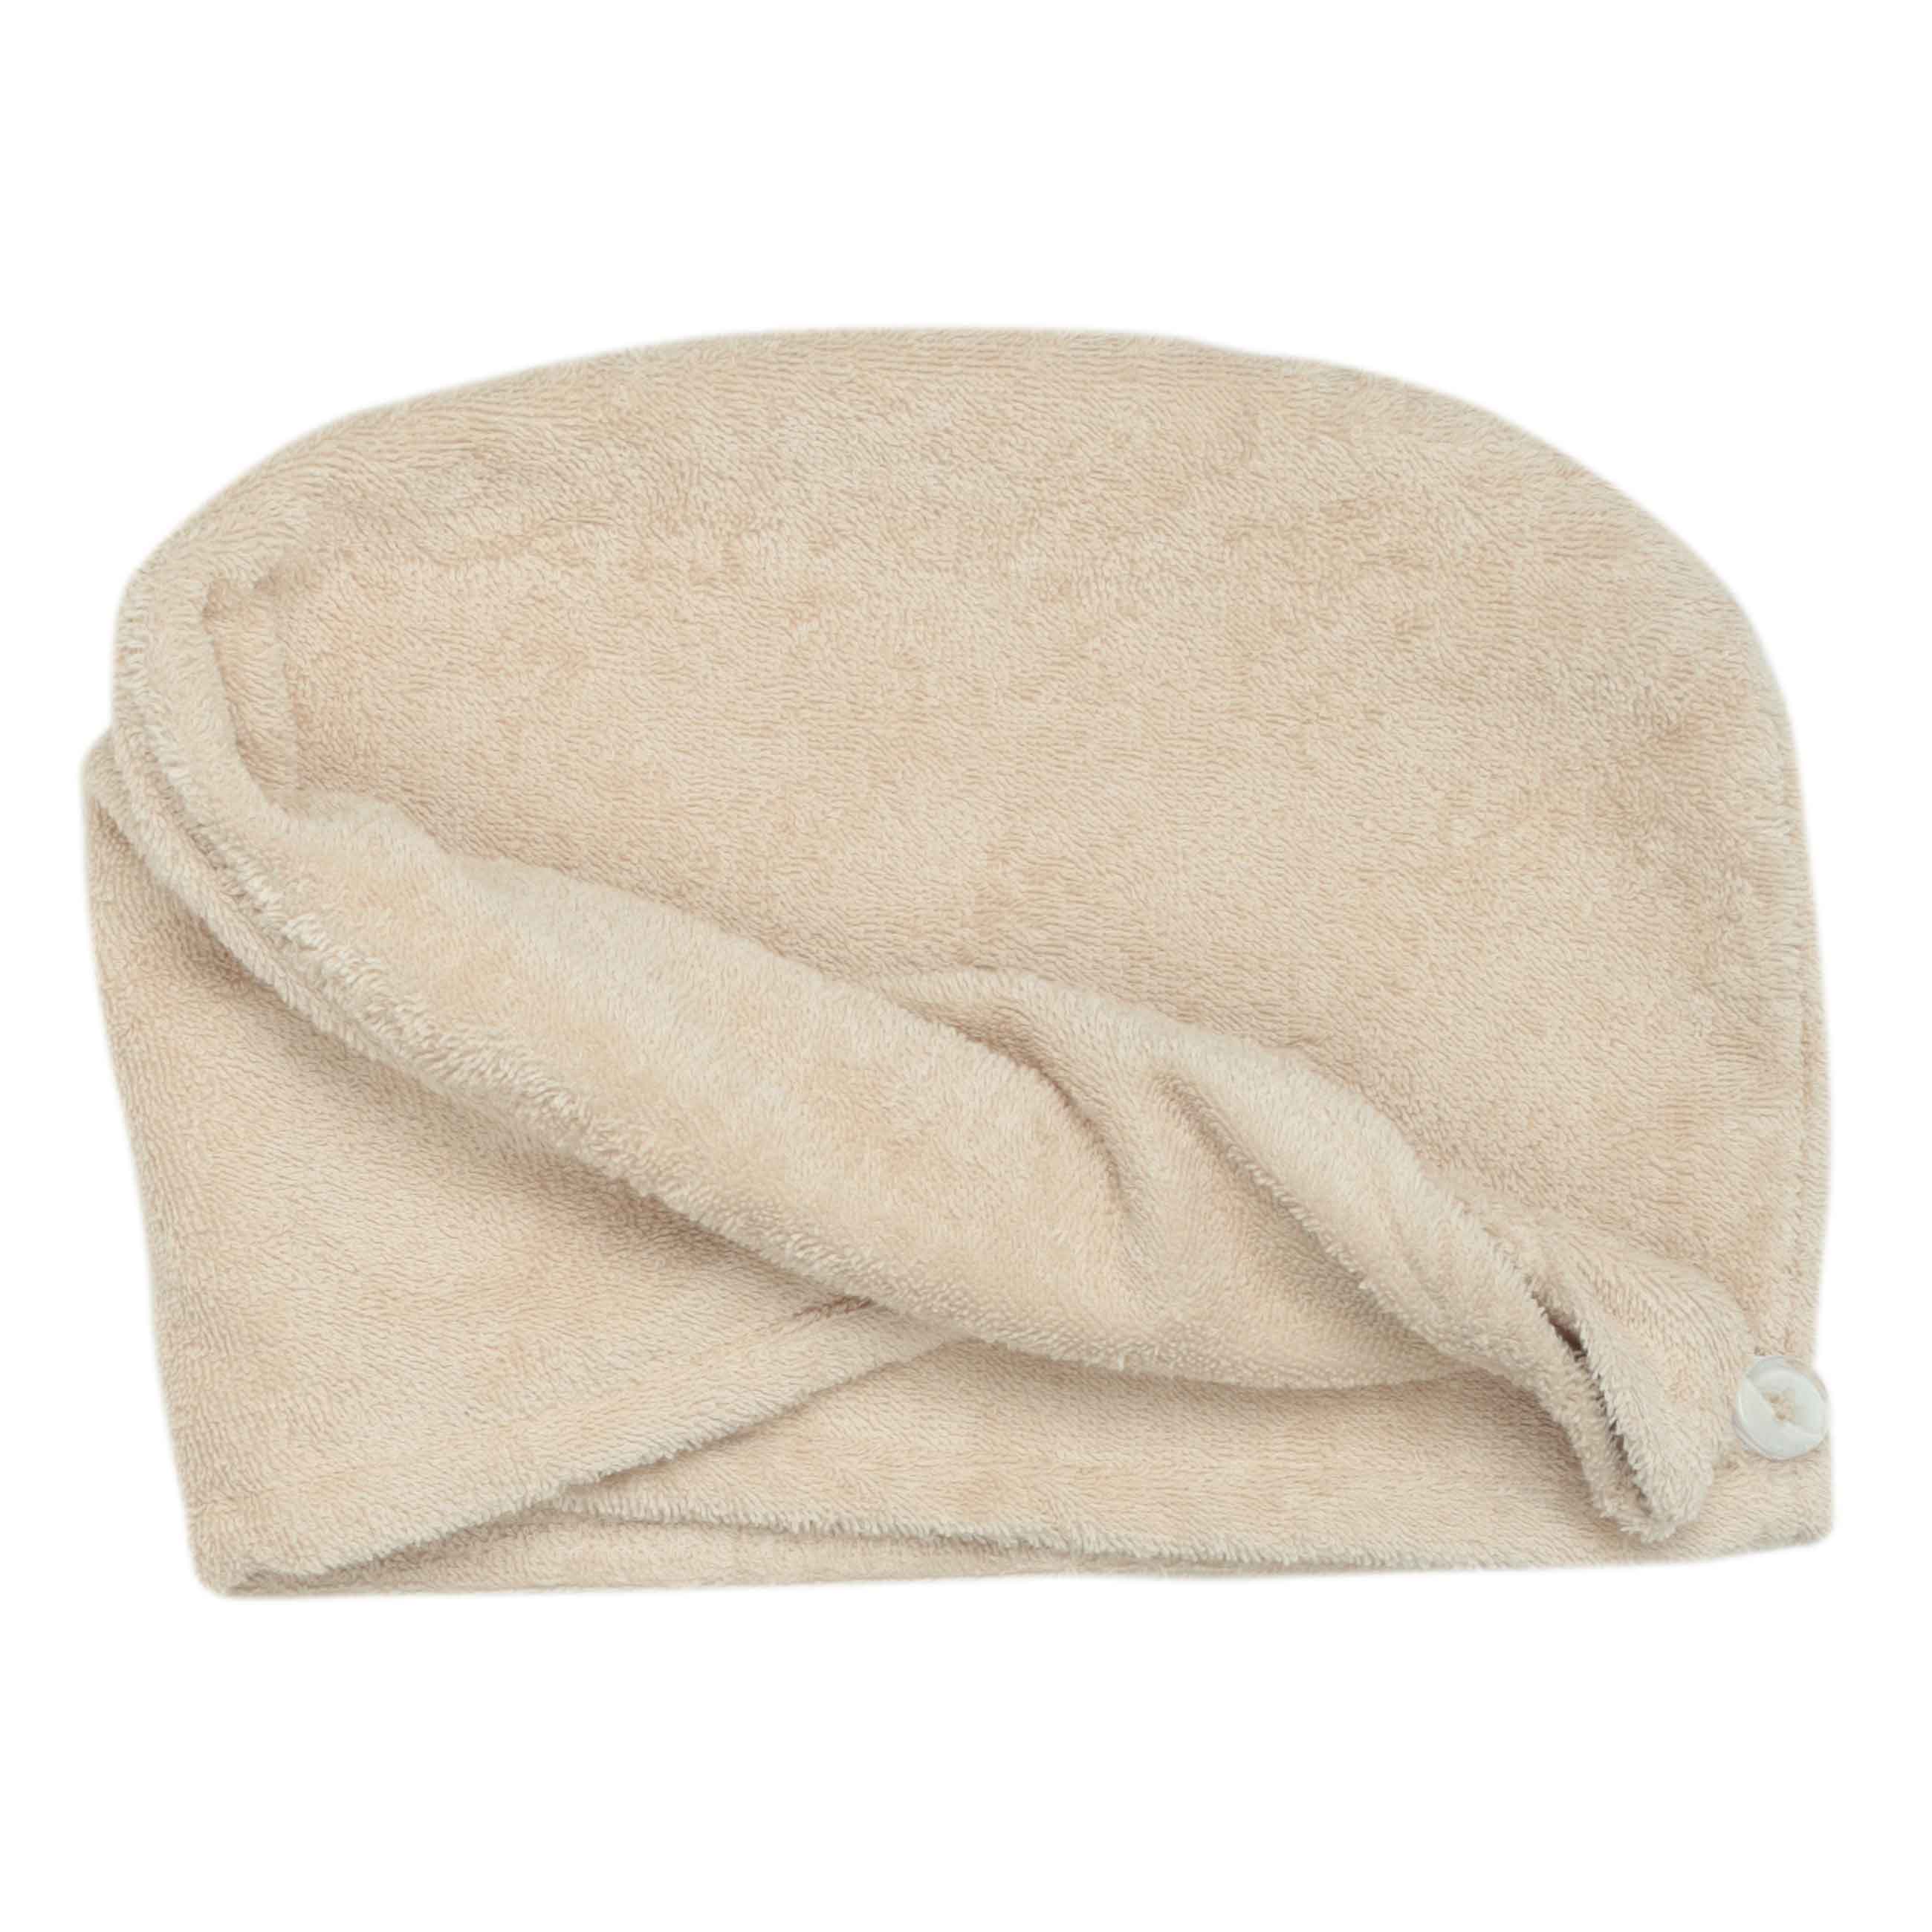 Women's bath set, 2 items, 70x140 / 24x67 cm, pareo towel / turban, cotton, ecru, Spa towel изображение № 6